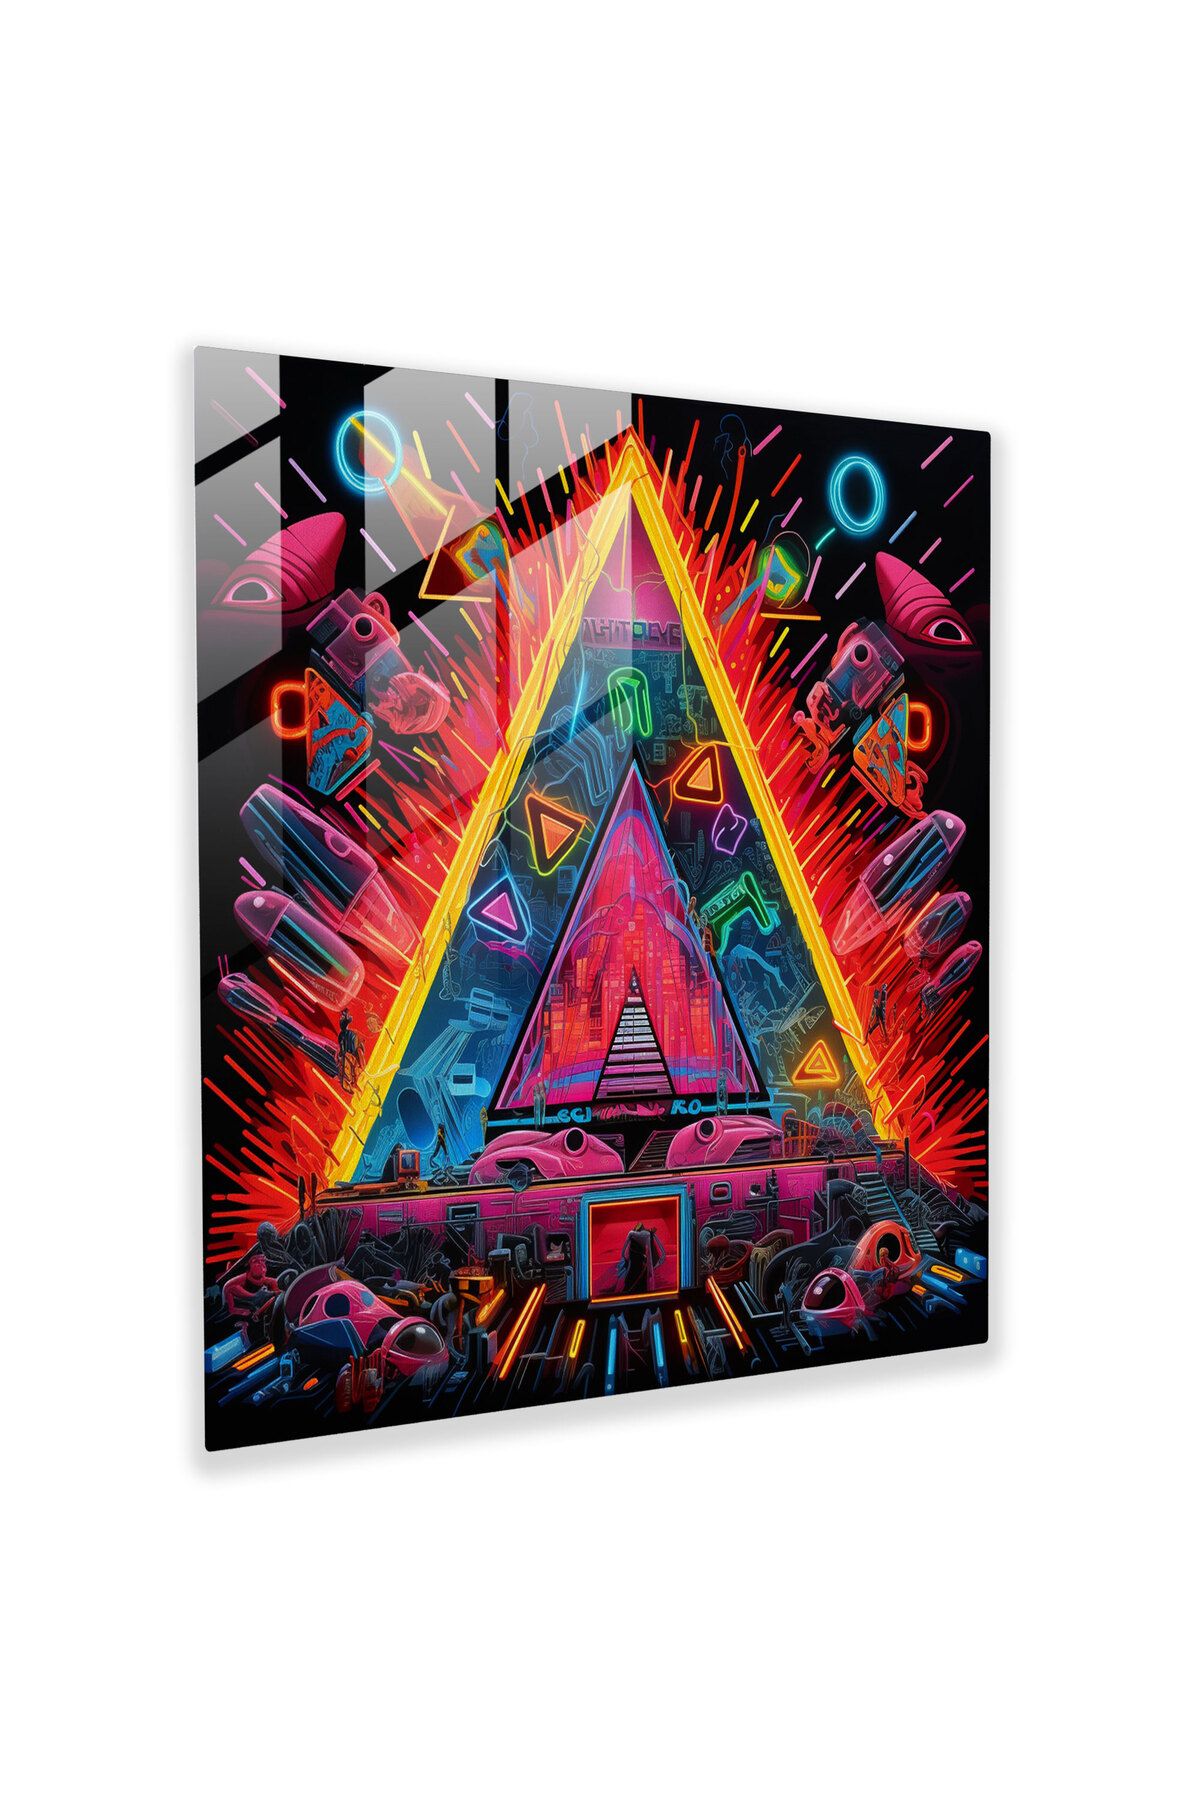 PaintedAnarchy Pink Floyd Cam Tablo - Neon Artwork - Pink Floyd, Pink Floyd, Cam Duvar Sanatı, Modern Sanat